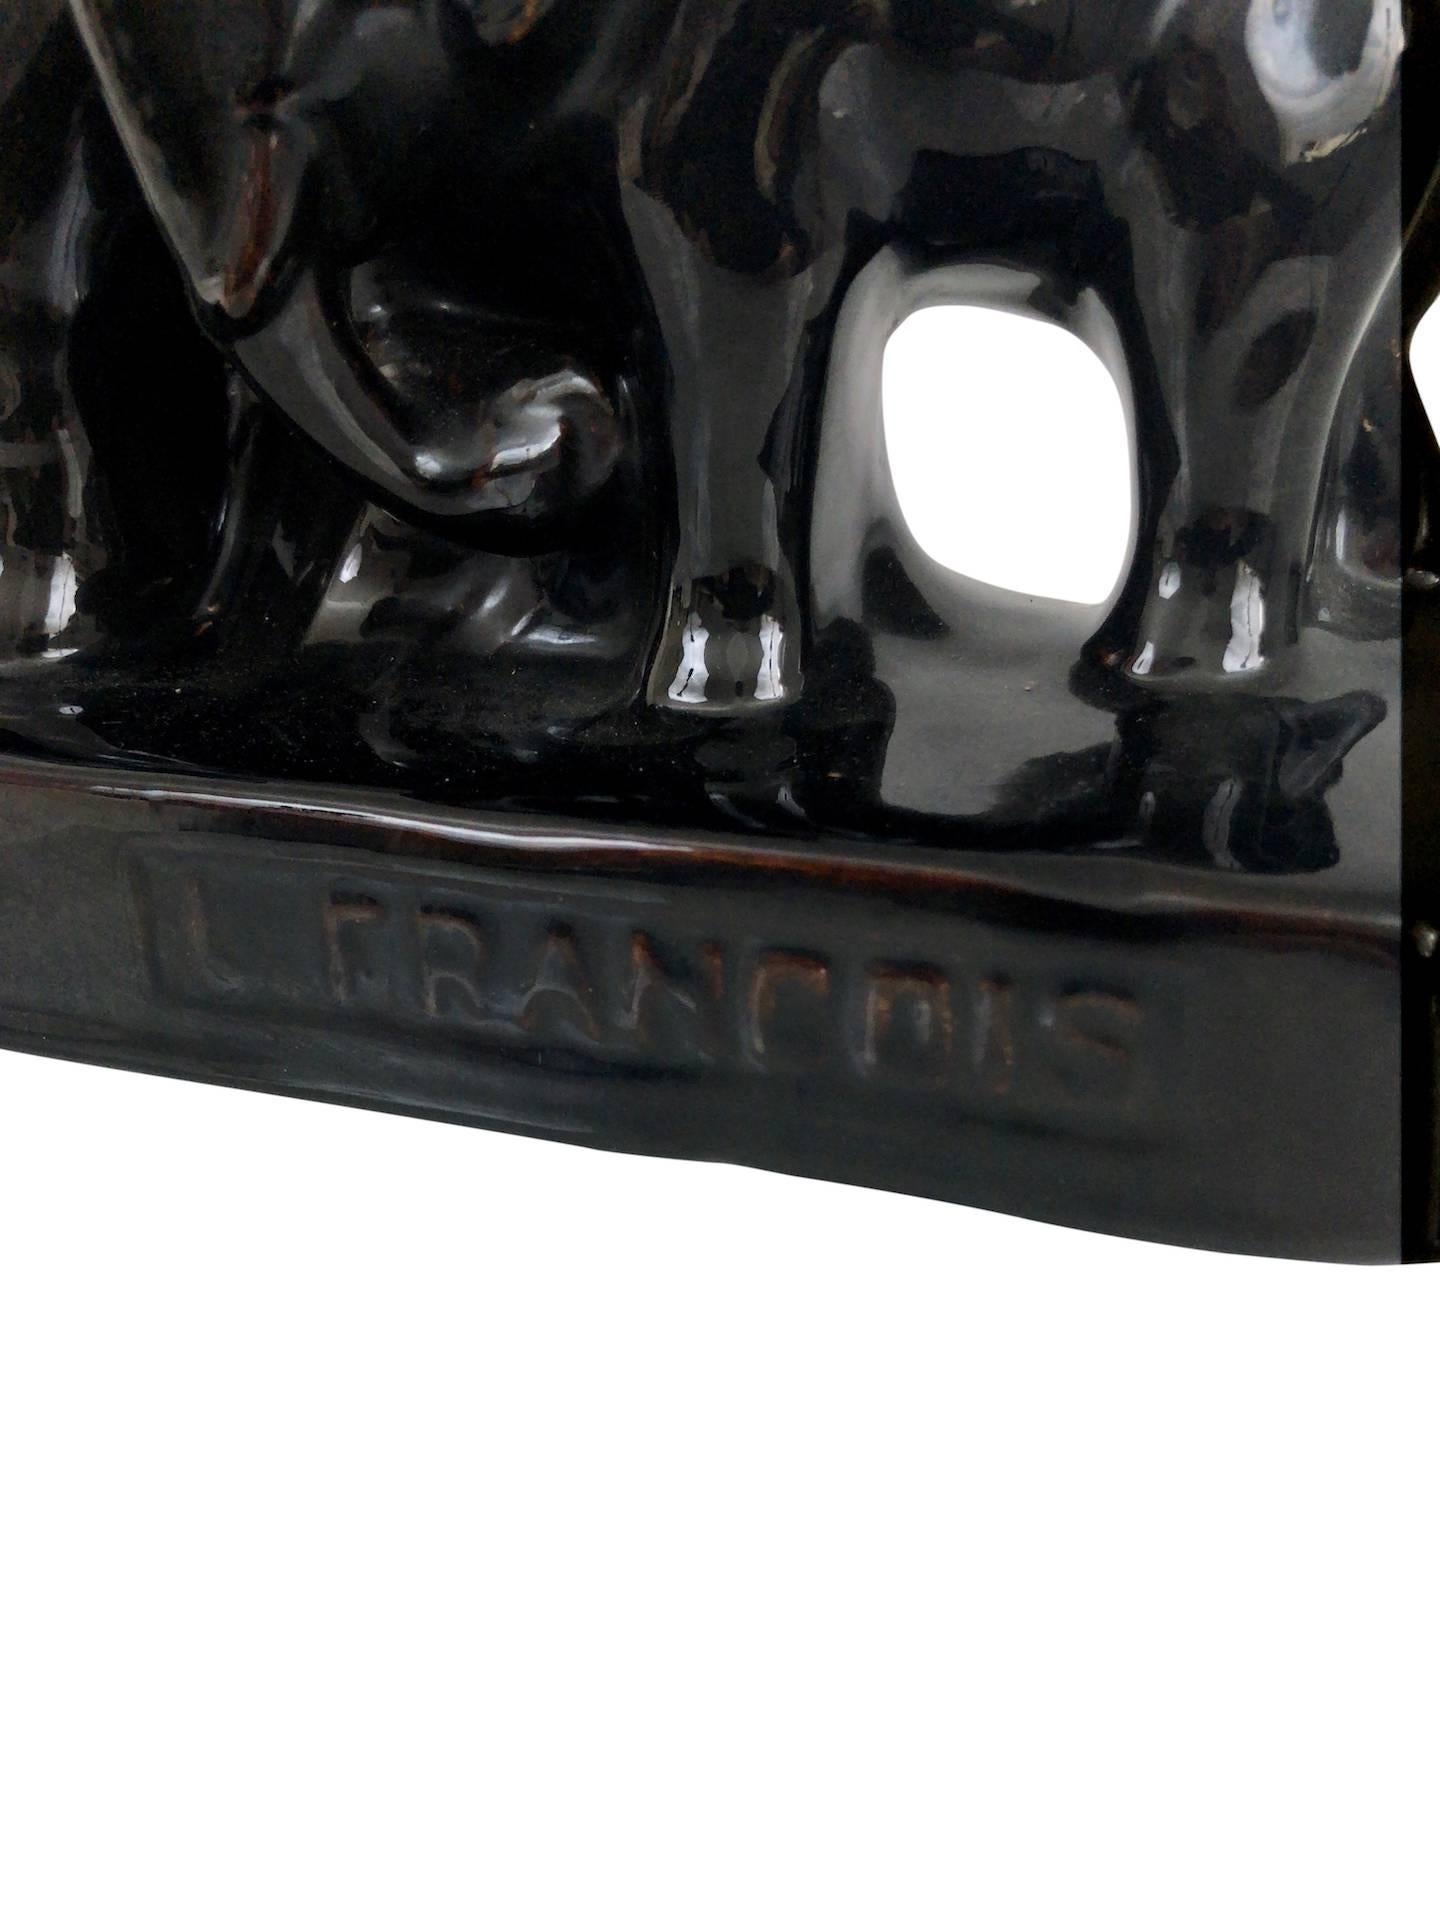 Black glazed ceramic elephants
signed: L. Francois
France, 1930s

Dimensions:
Width 35 cm
Height 23 cm.
Depth: 9 cm